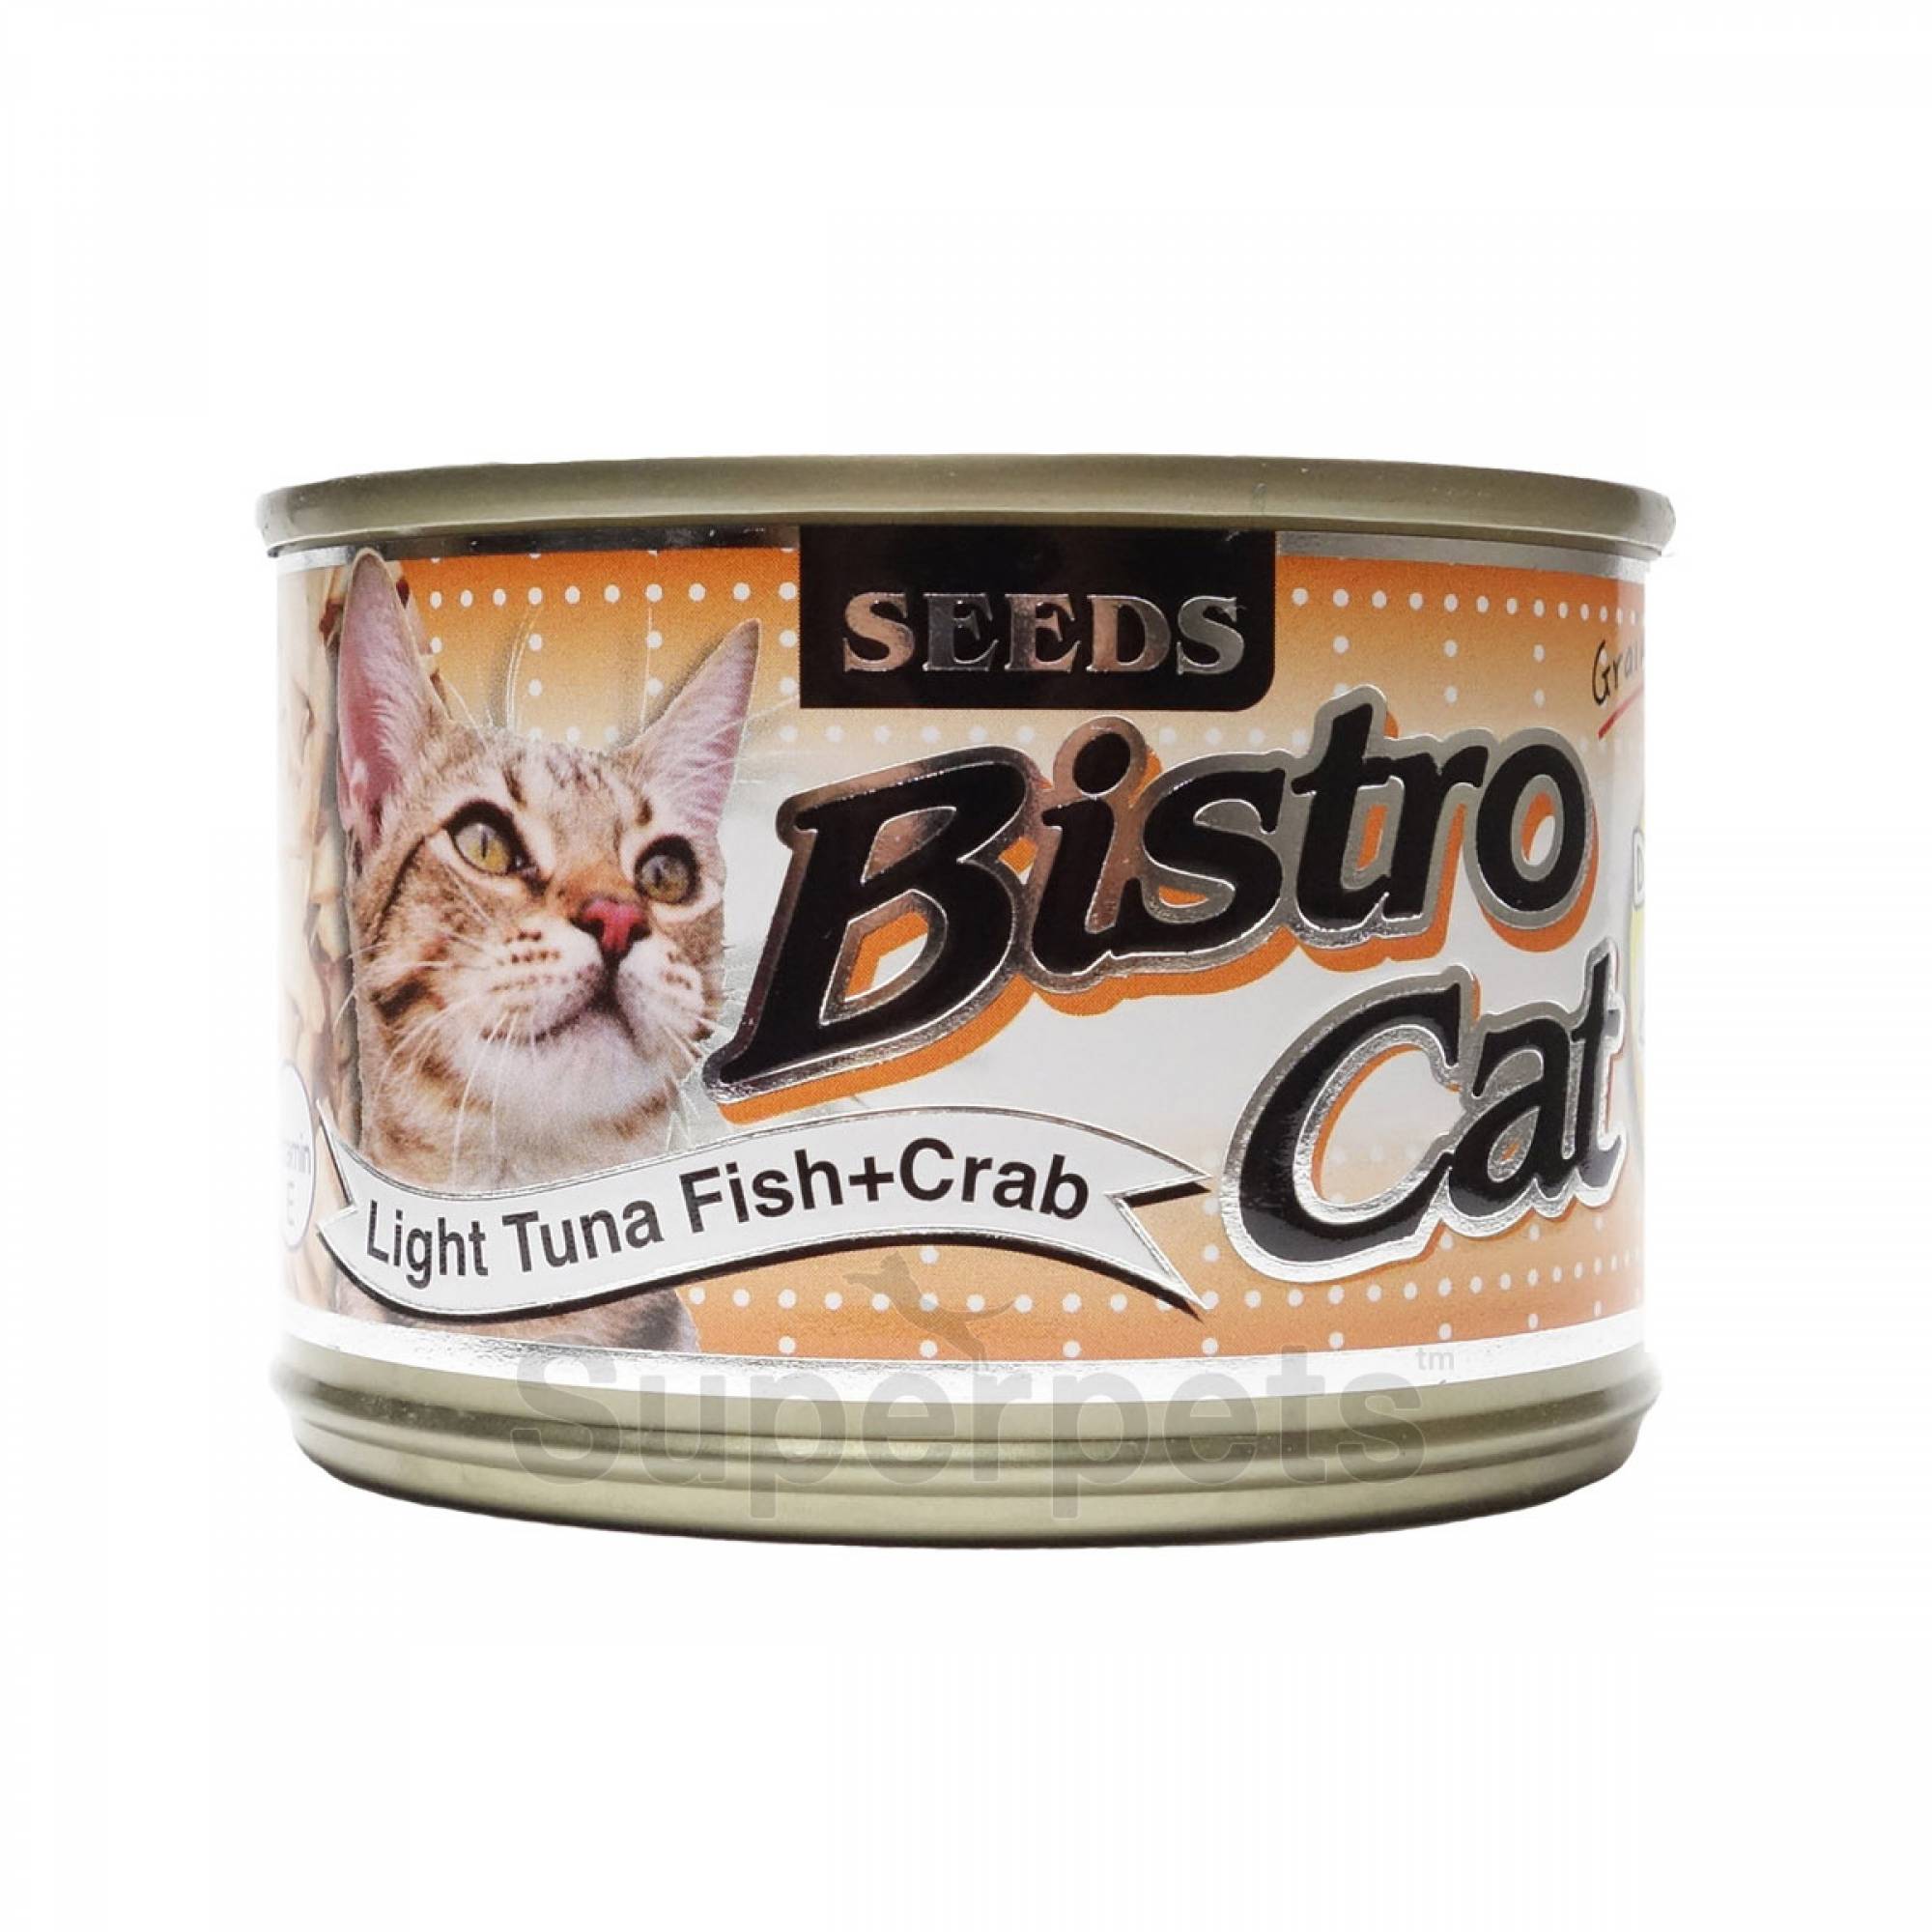 Bistro Cat Light Tuna Fish + Crab Grain-Free 170g